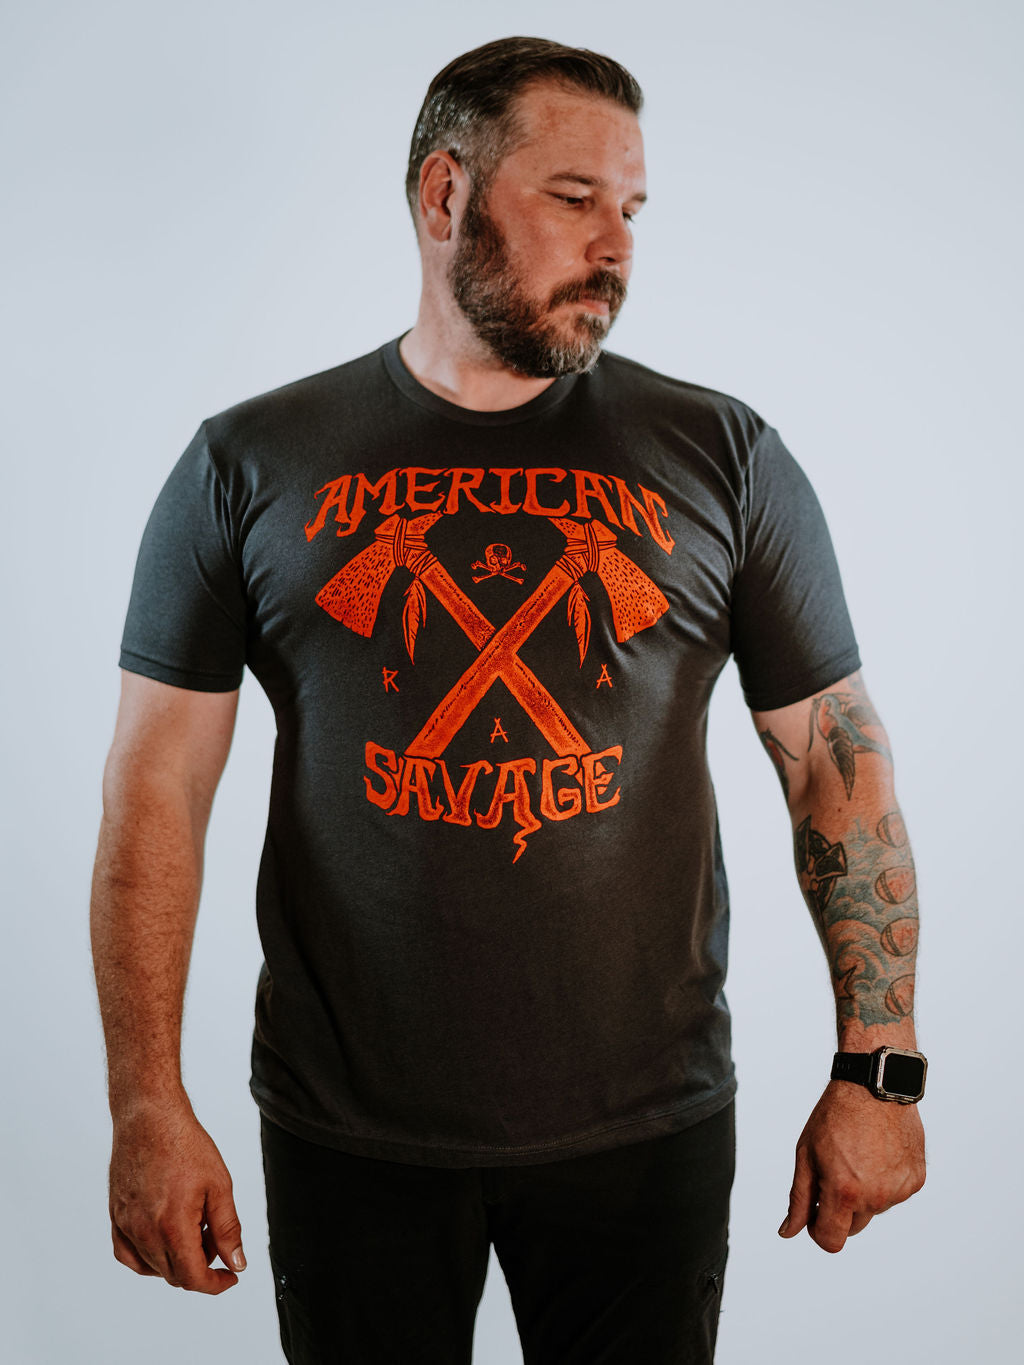 American Savage Shirt